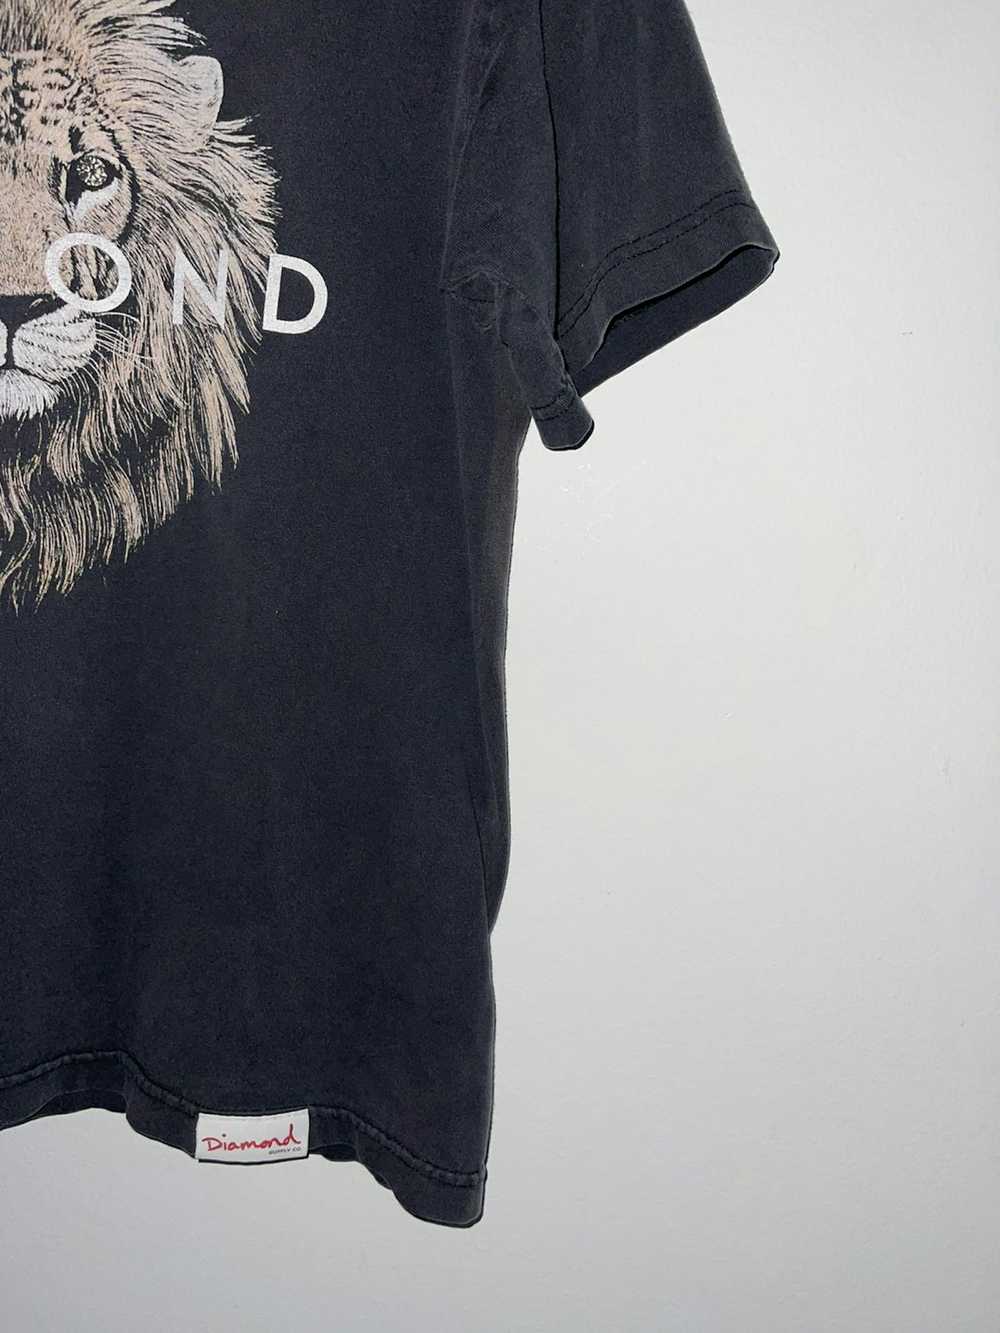 Diamond Supply Co × Vintage Diamond Lion Shirt - image 4